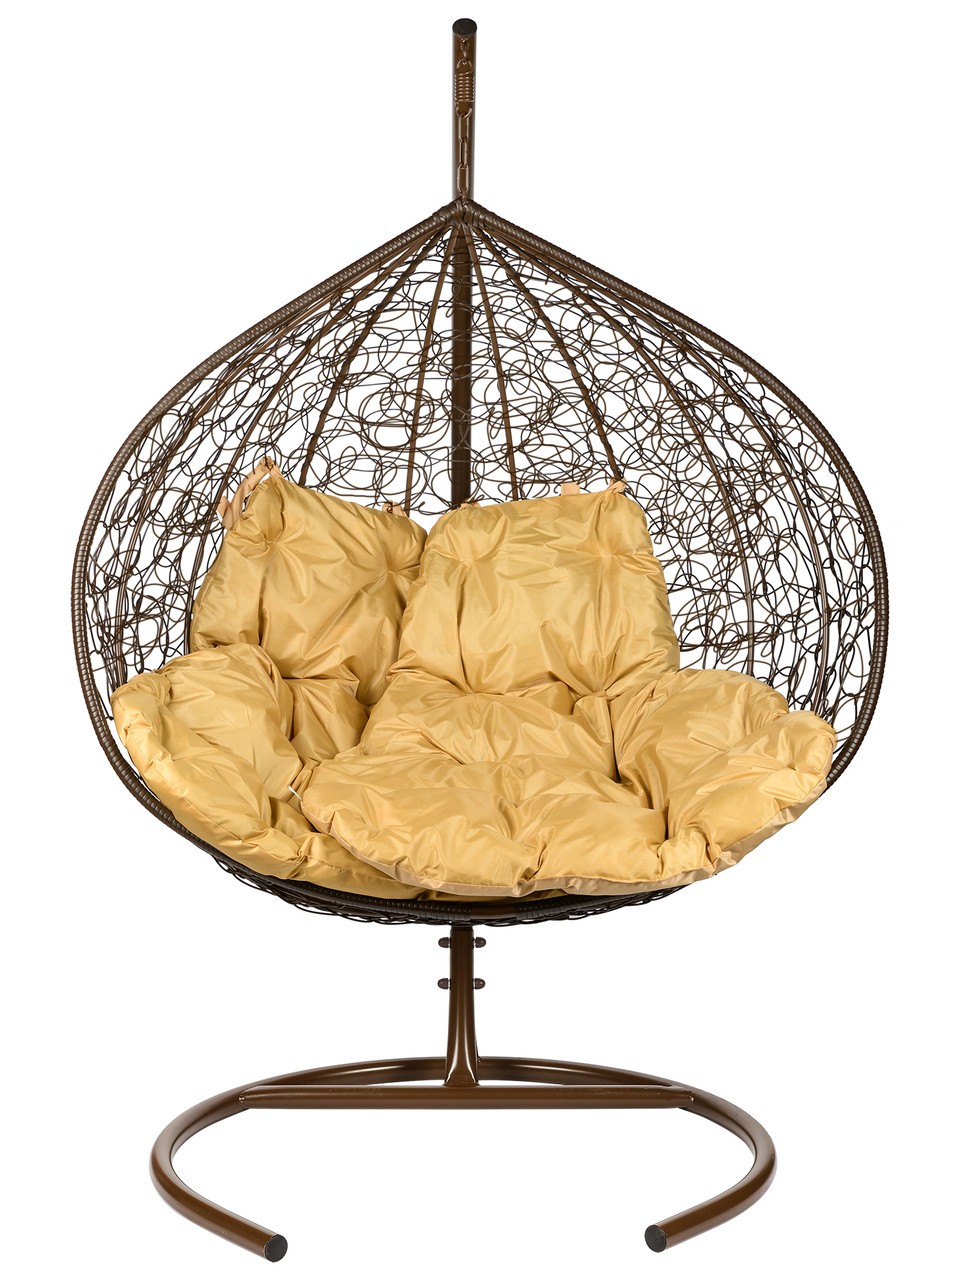 Двойное подвесное кресло "Gemini" promo brown бежевая подушка